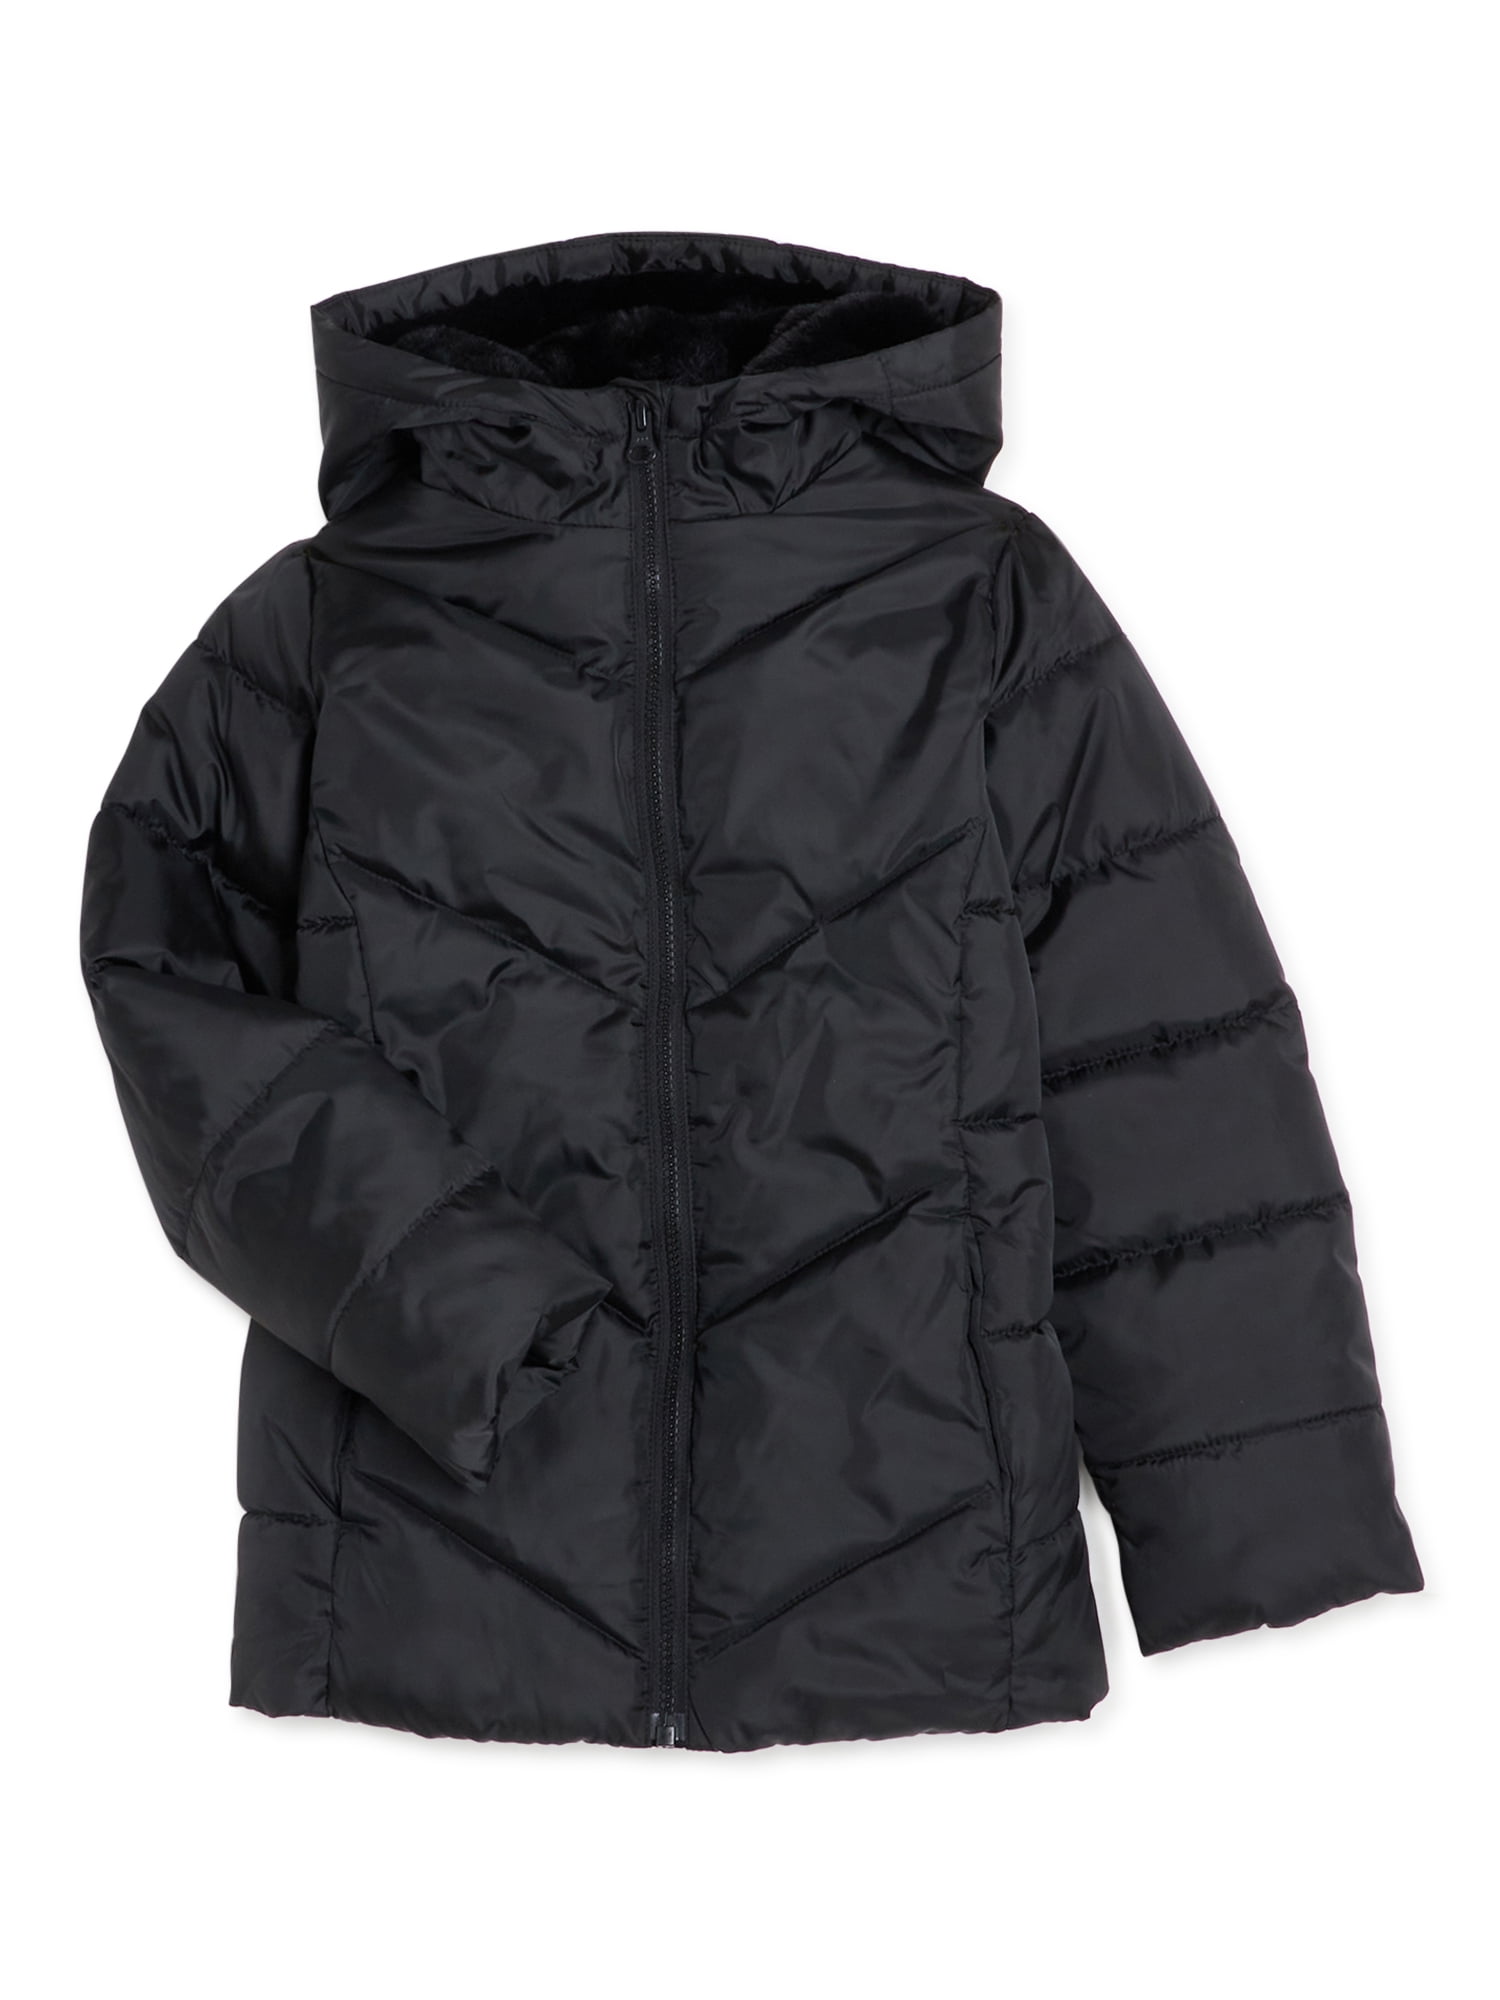 Swiss Tech Girls Winter Puffer Jacket with Hood, Sizes 4-18 & Plus ...